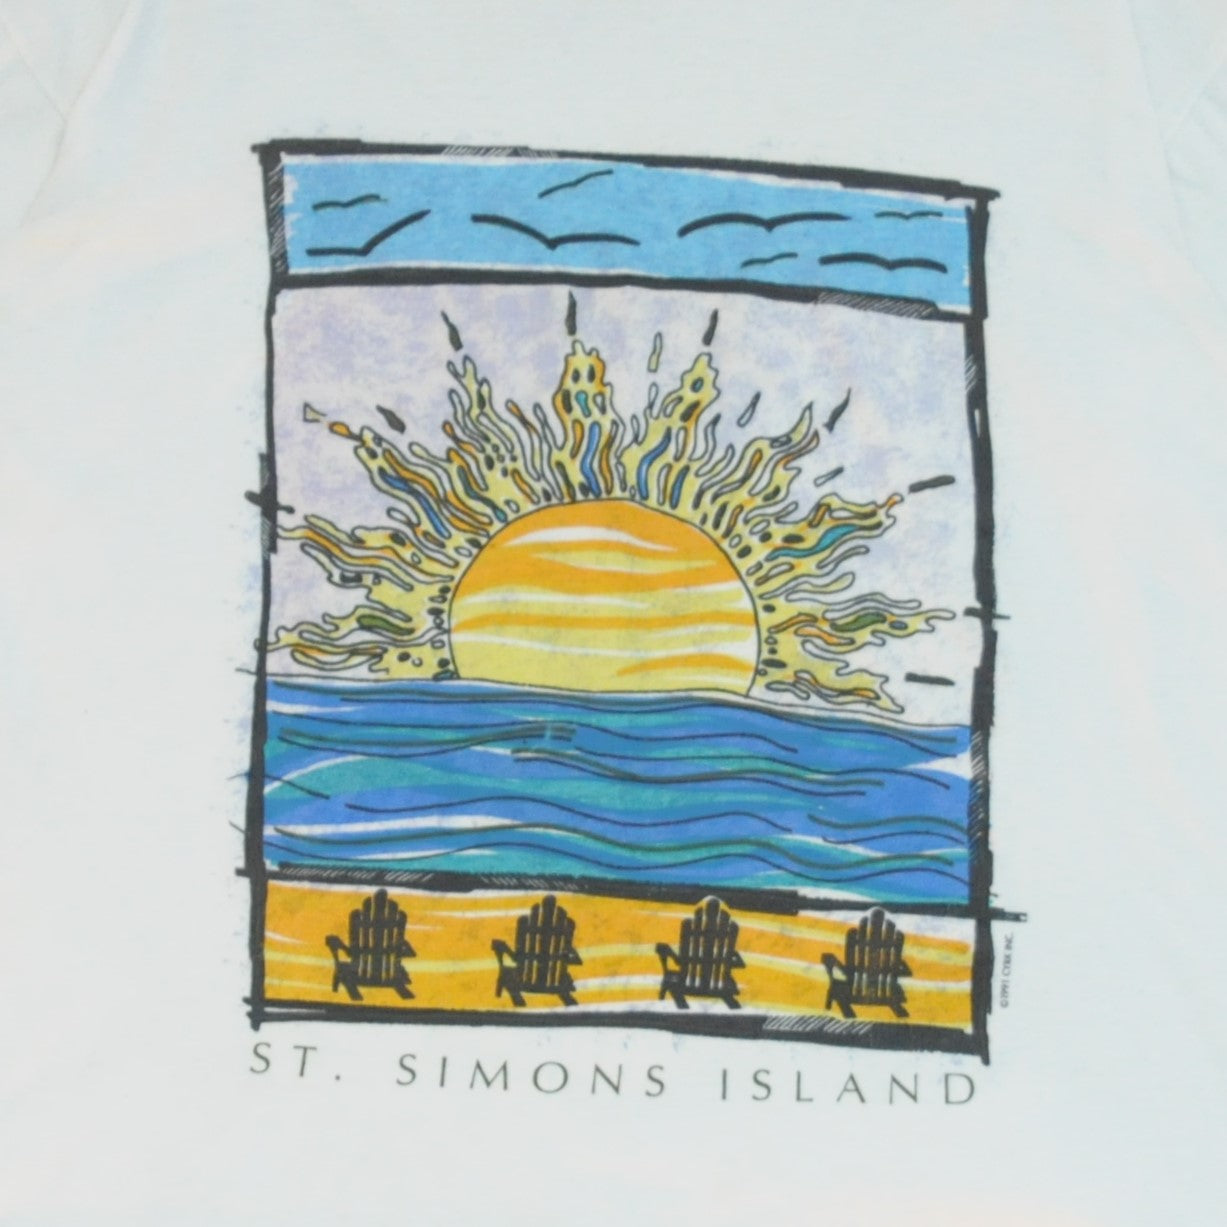 ST. SIMONS ISLAND T-shirts Used